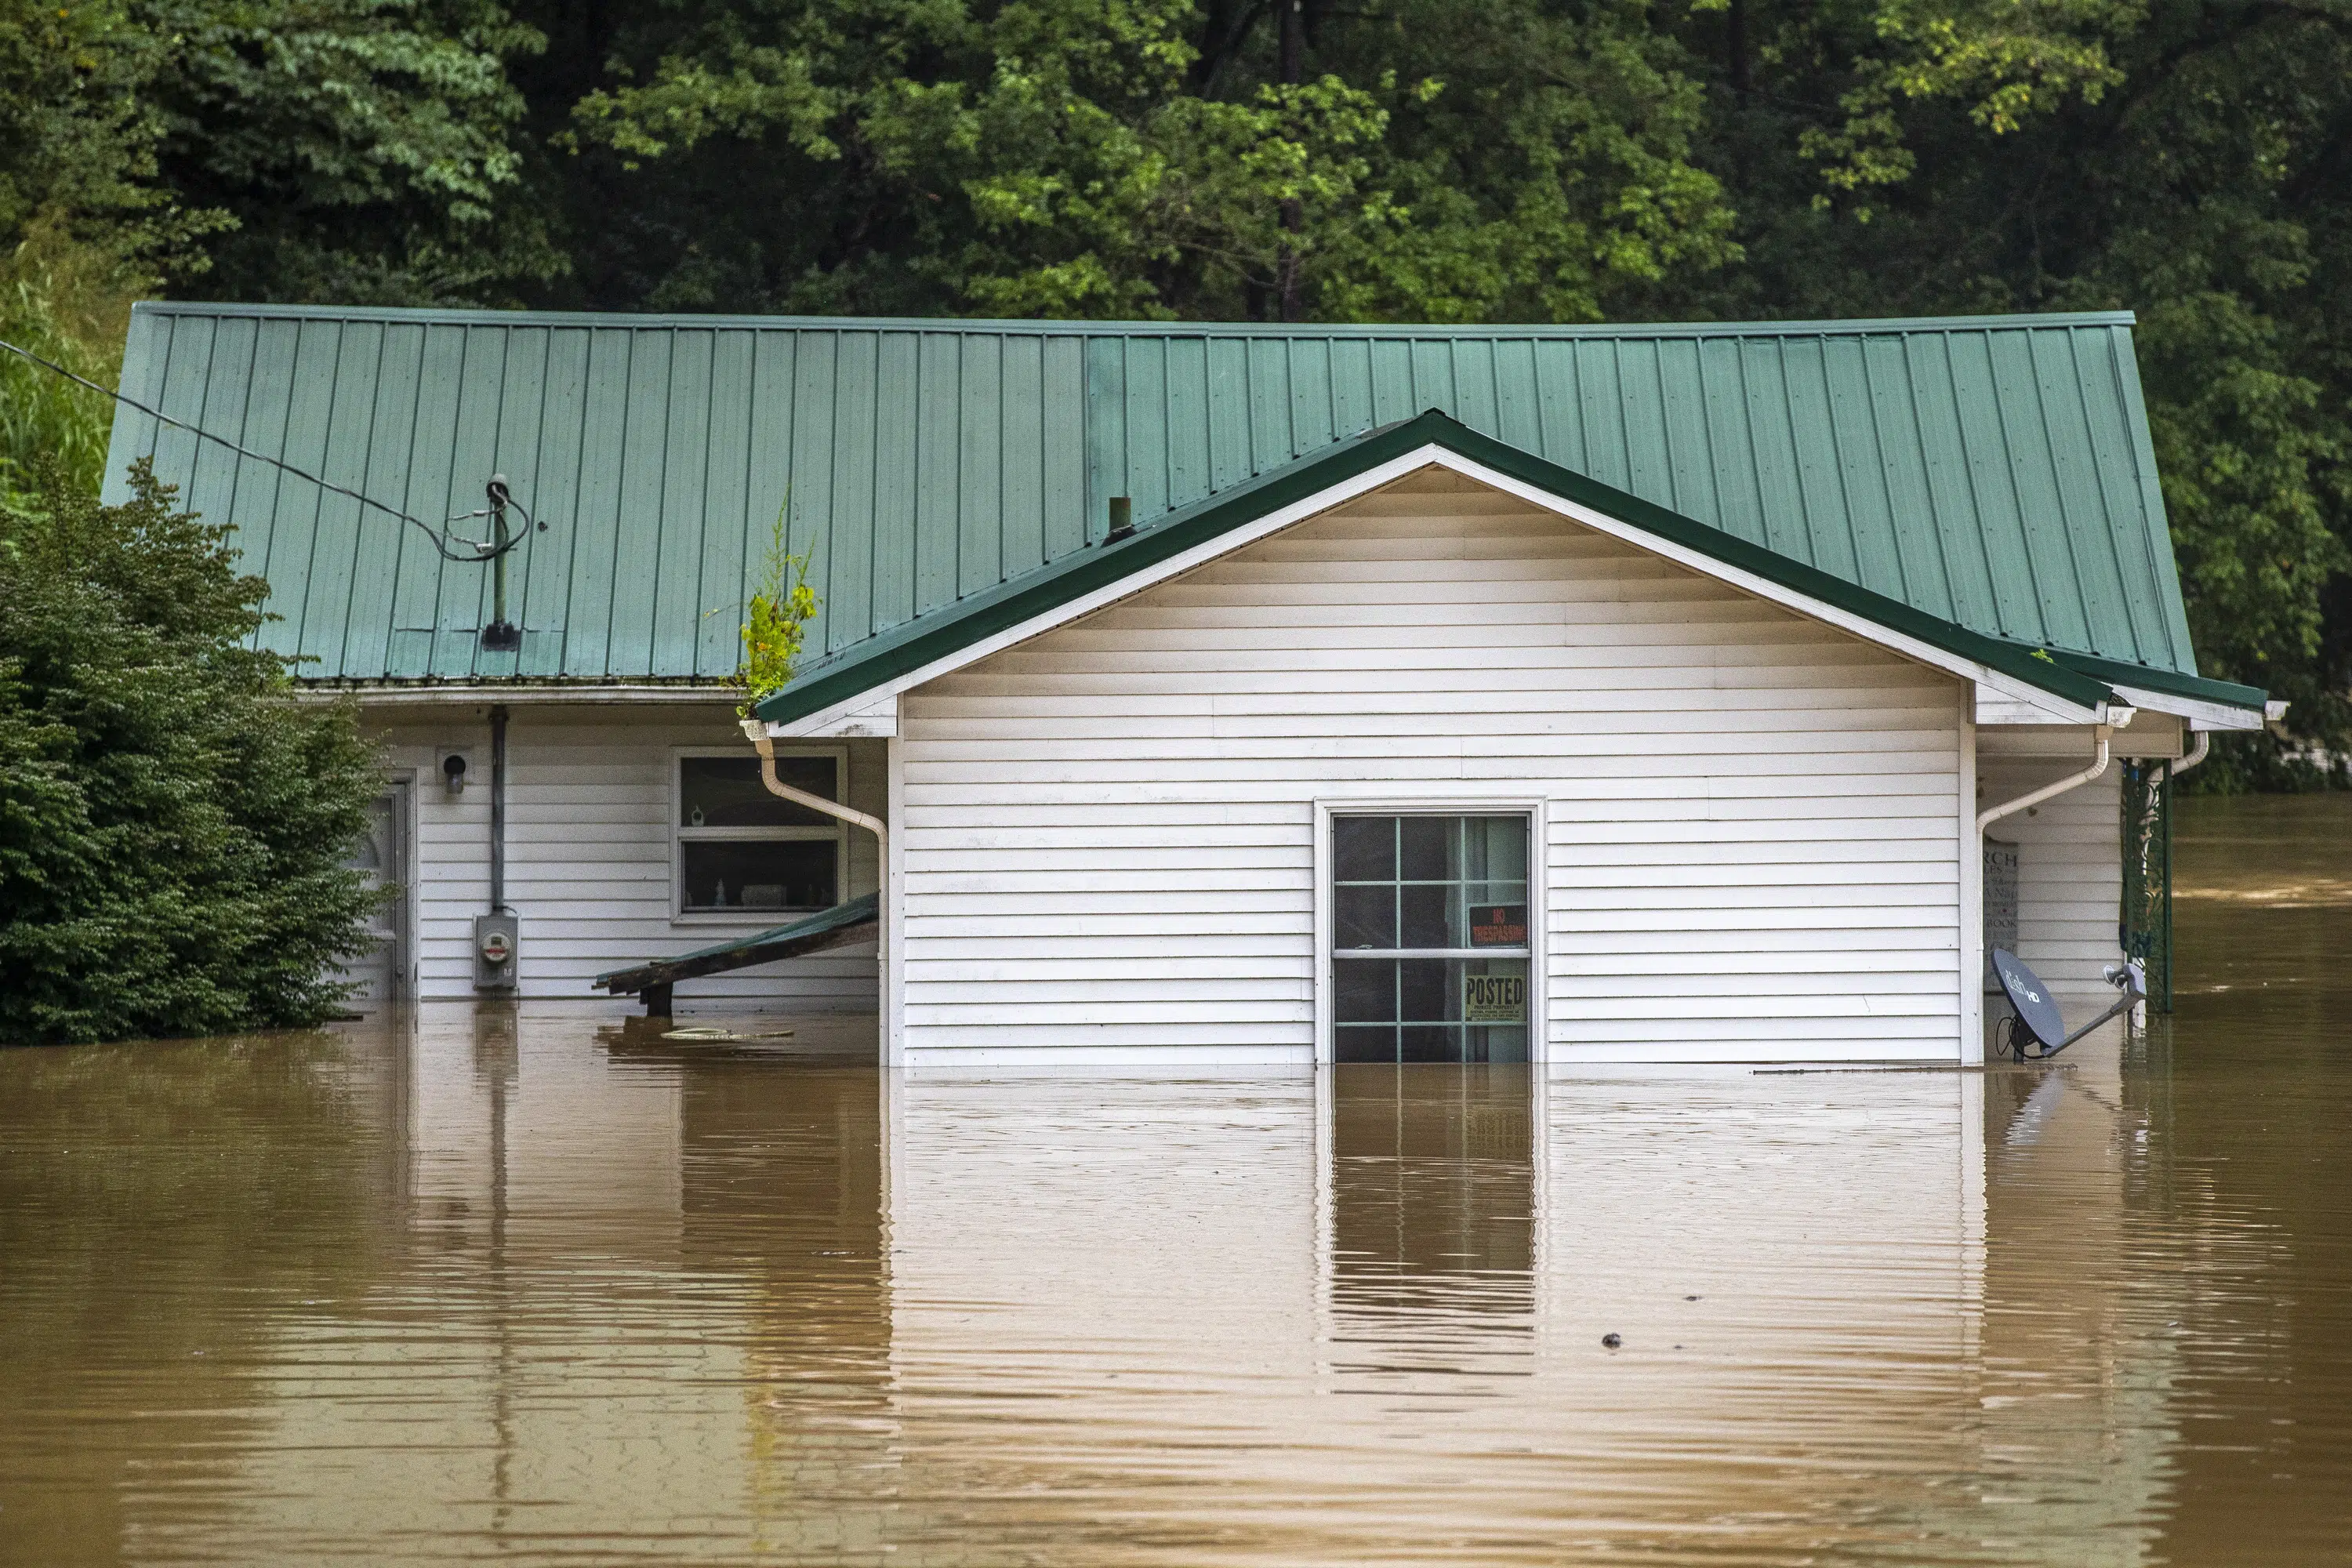 Appalachian Floods Kill at Least 15 as Rescue Teams Deploy